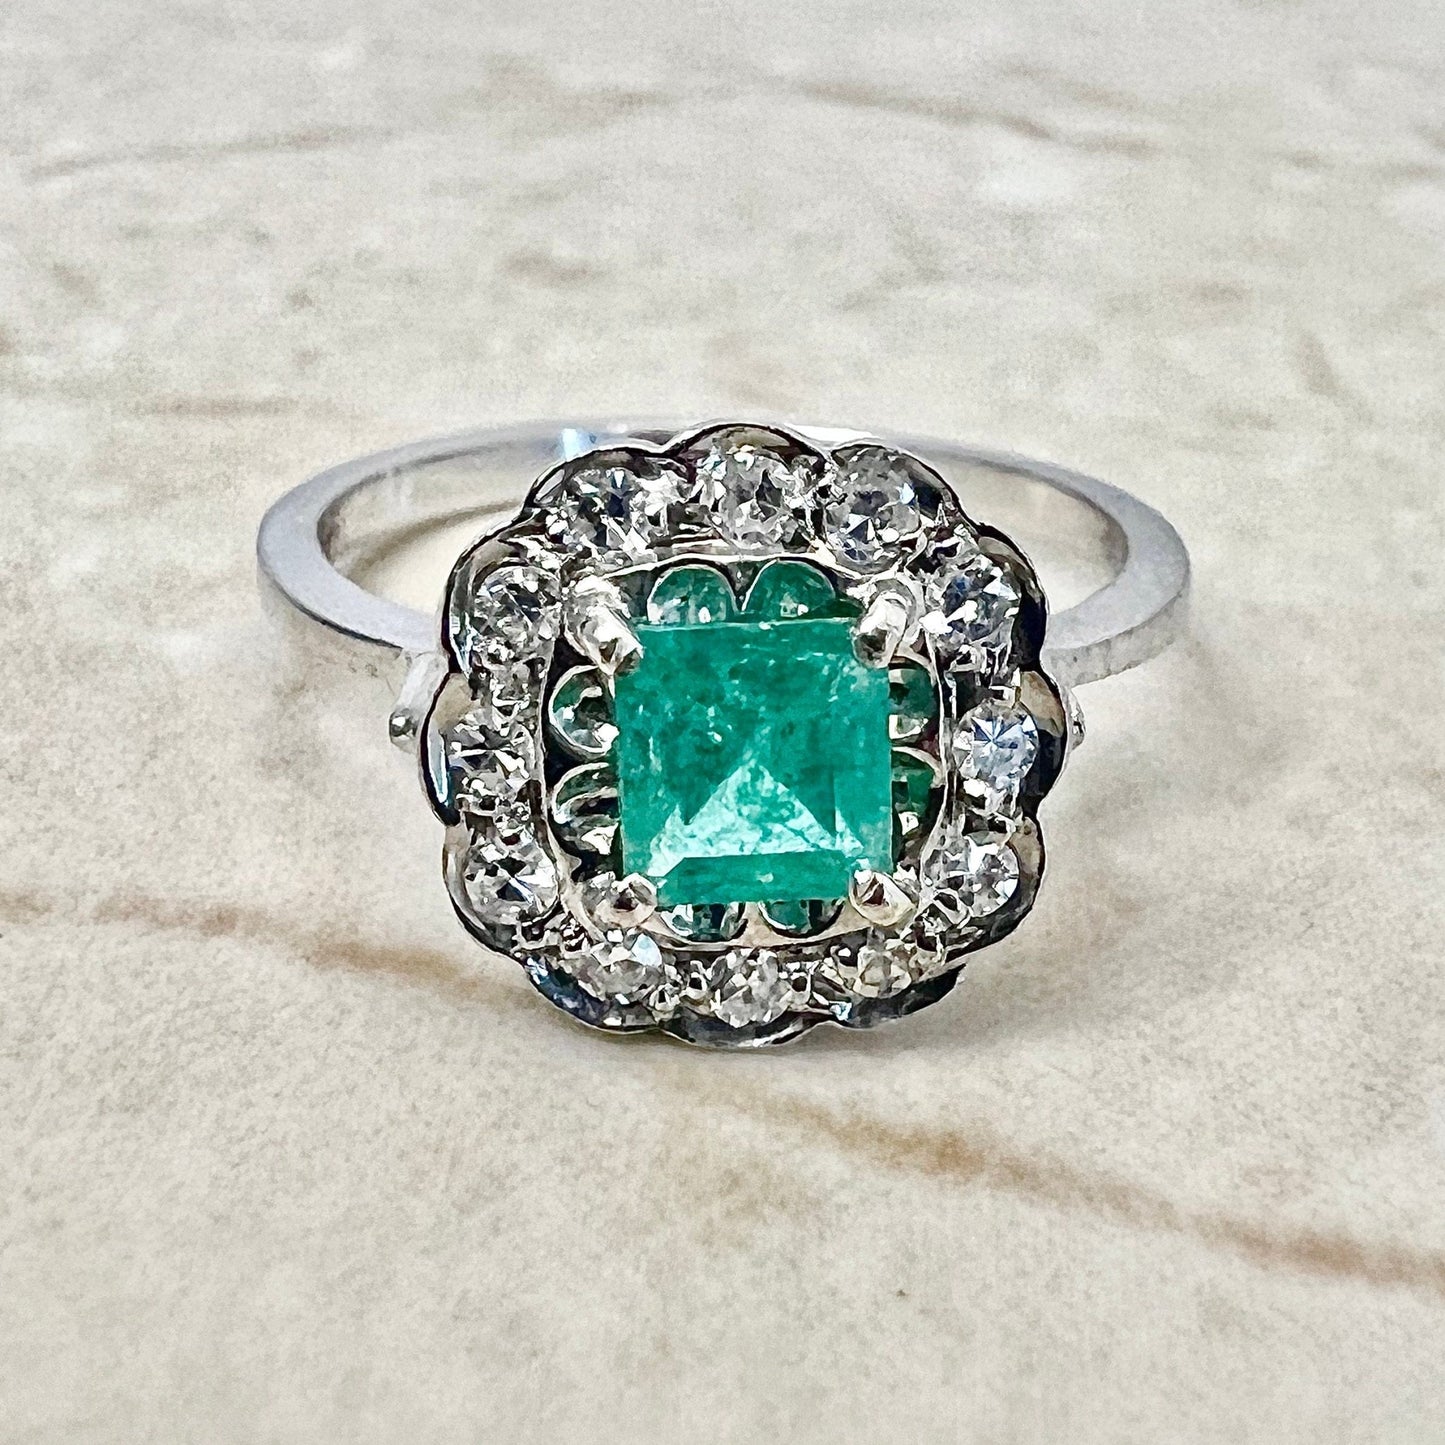 Vintage 18 Karat White Gold Natural Emerald & Diamond Halo Ring - Engagement Ring - Cocktail Ring - April May Birthstone Gift - Size 6 US